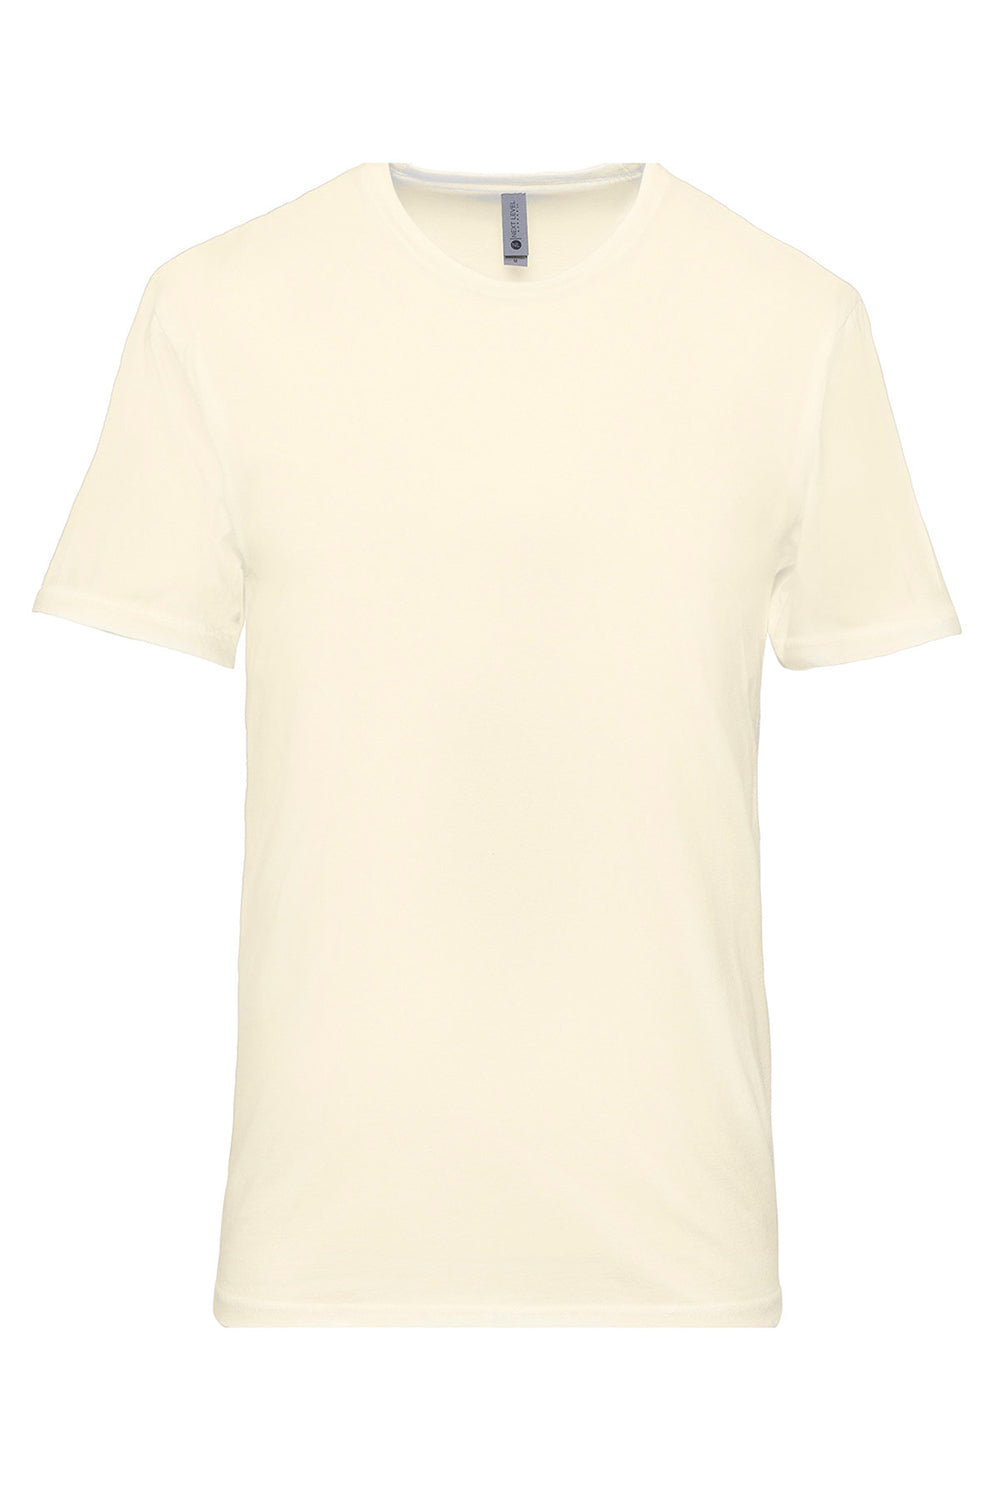 Next Level 3600SW Mens Soft Wash Short Sleeve Crewneck T-Shirt Natural Flat Front